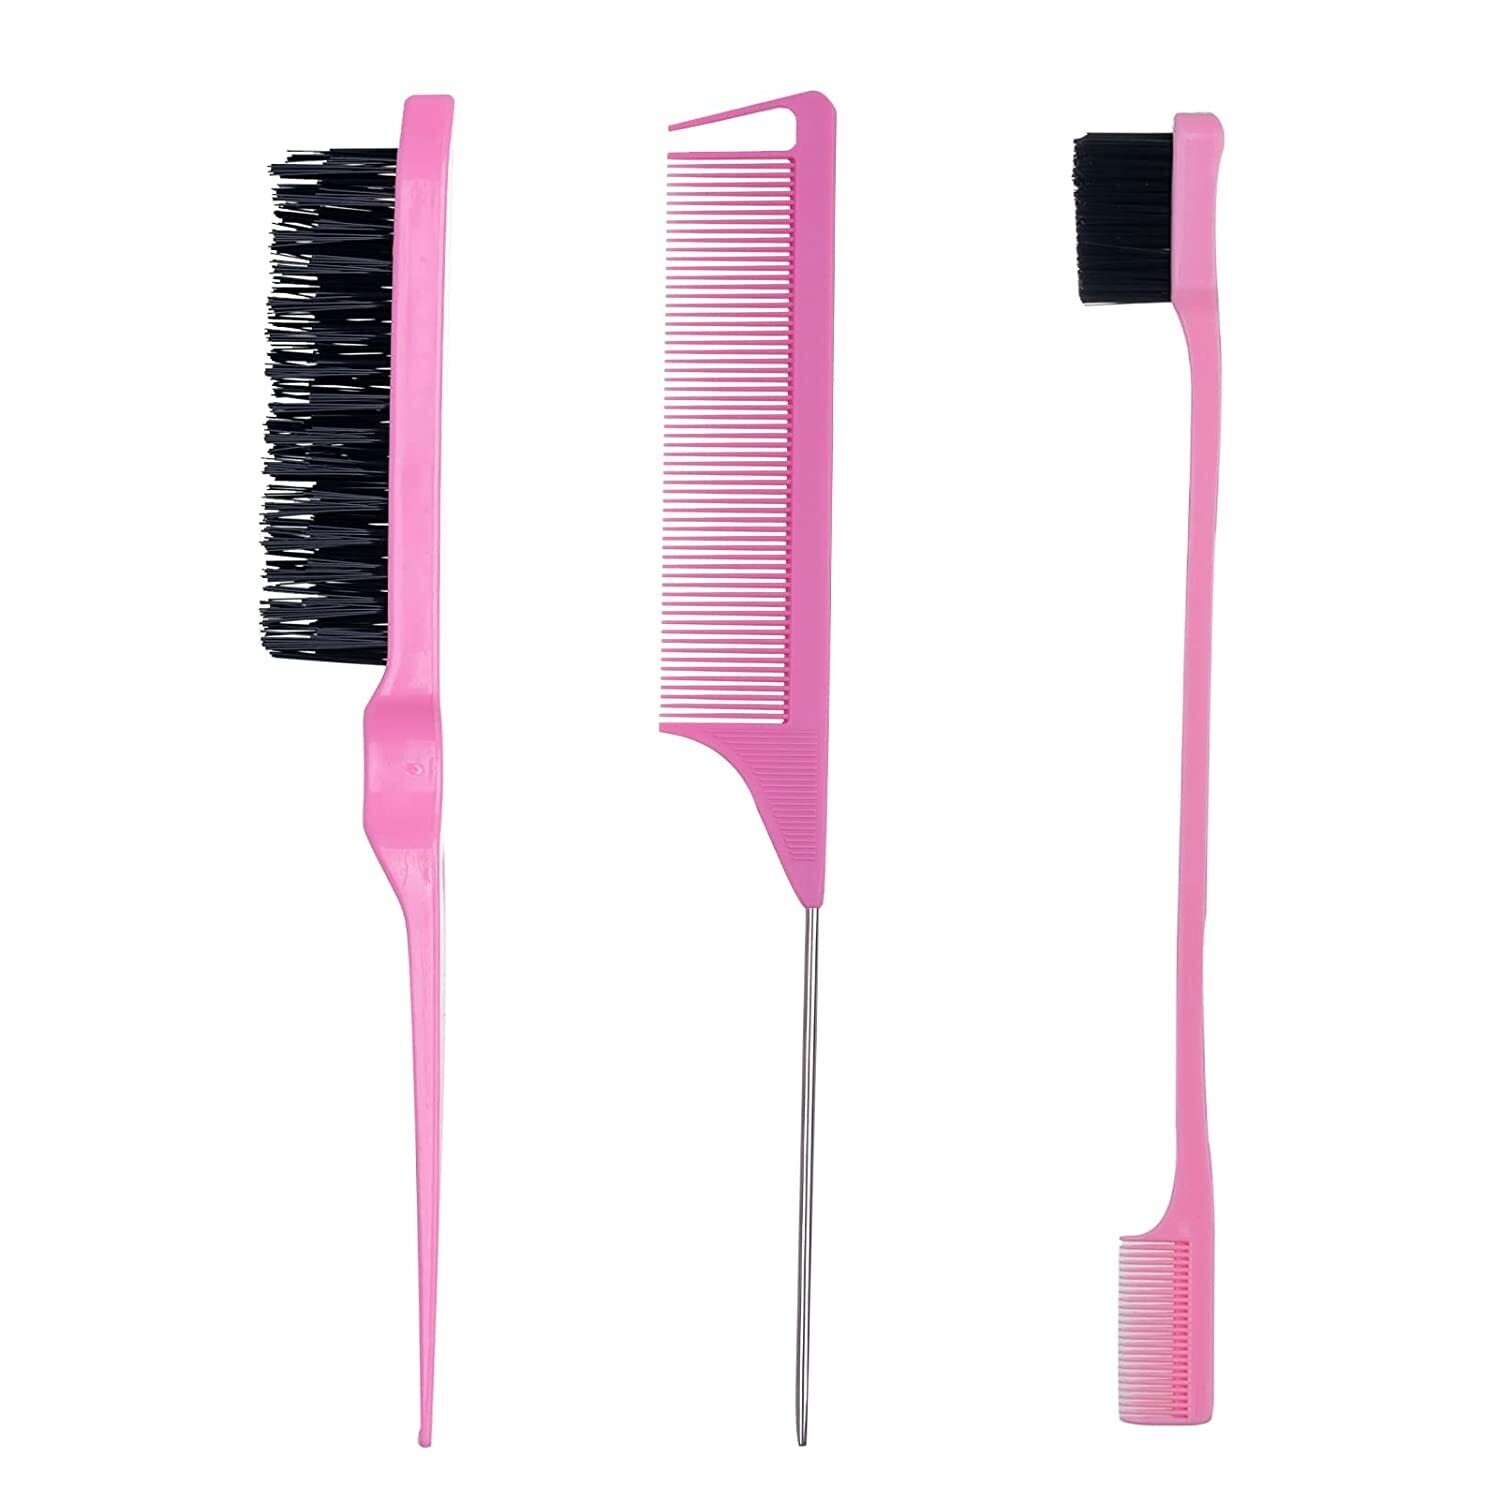 Goiple 3 Pieces Hair Styling Comb Set Teasing Hair Brush Rat Tail Comb Edge Brush for Edge&amp;Back Brushing Combing Slicking Hair for Women pink